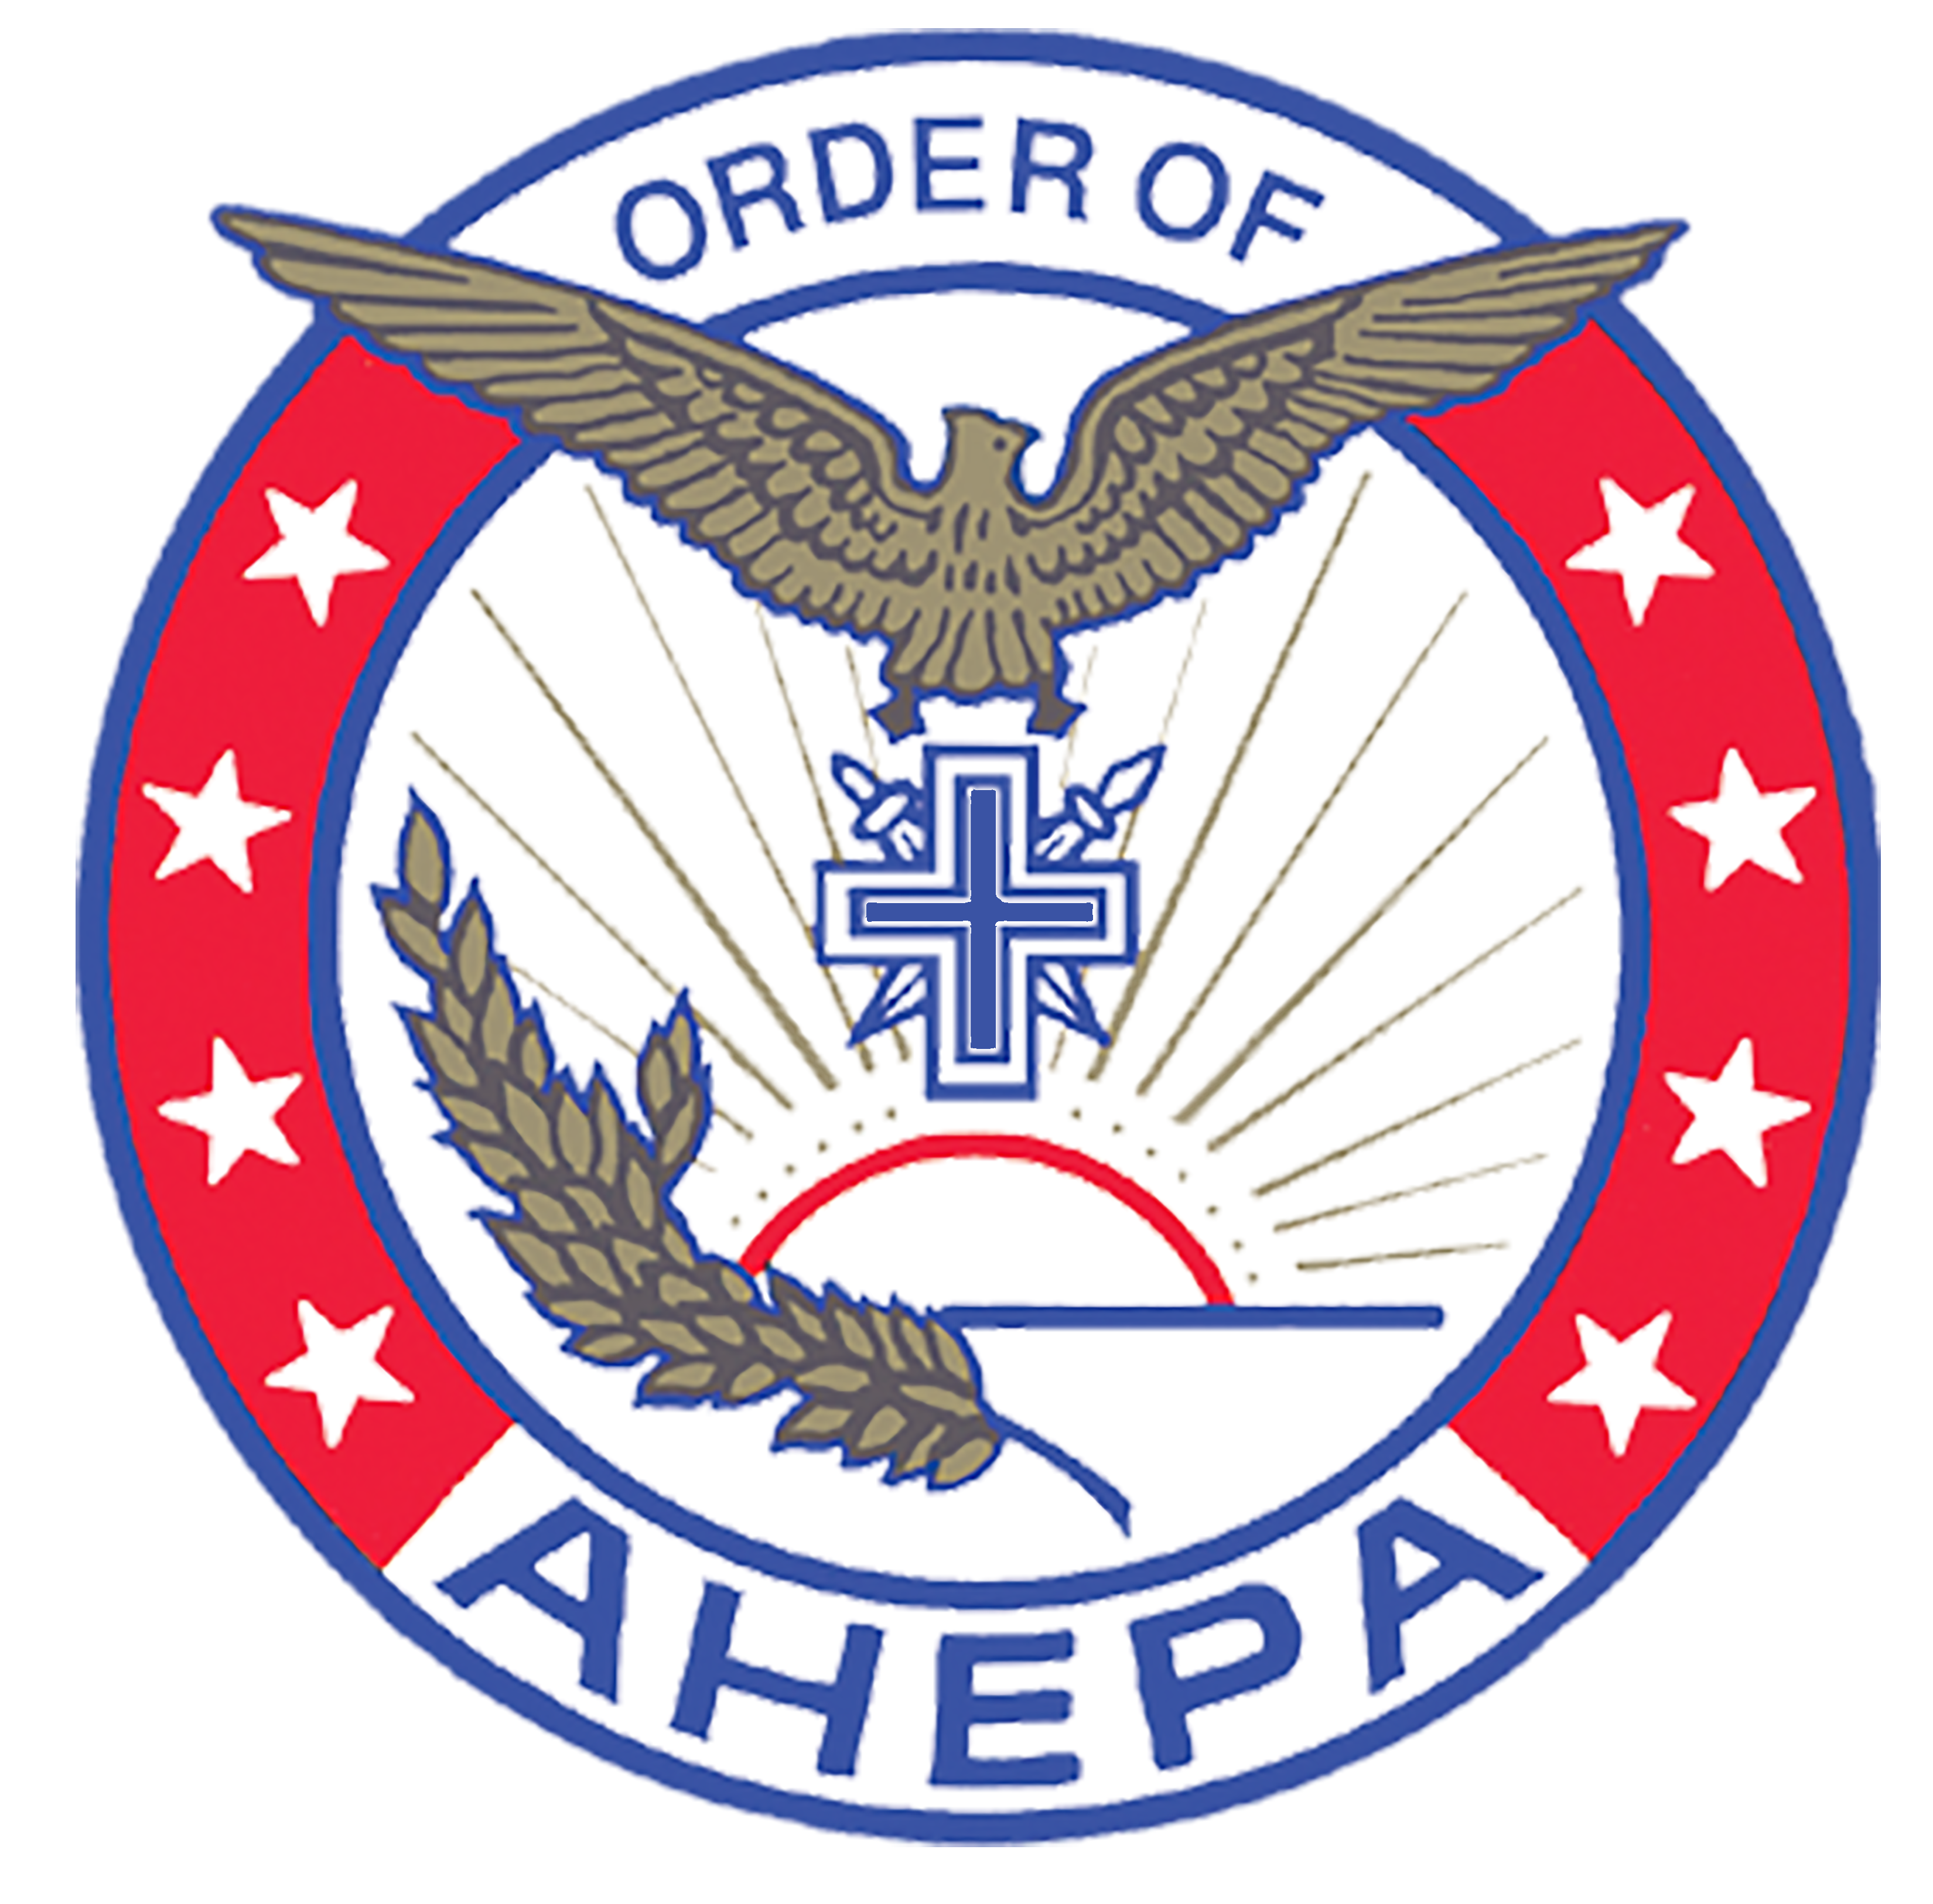 AHEPA website